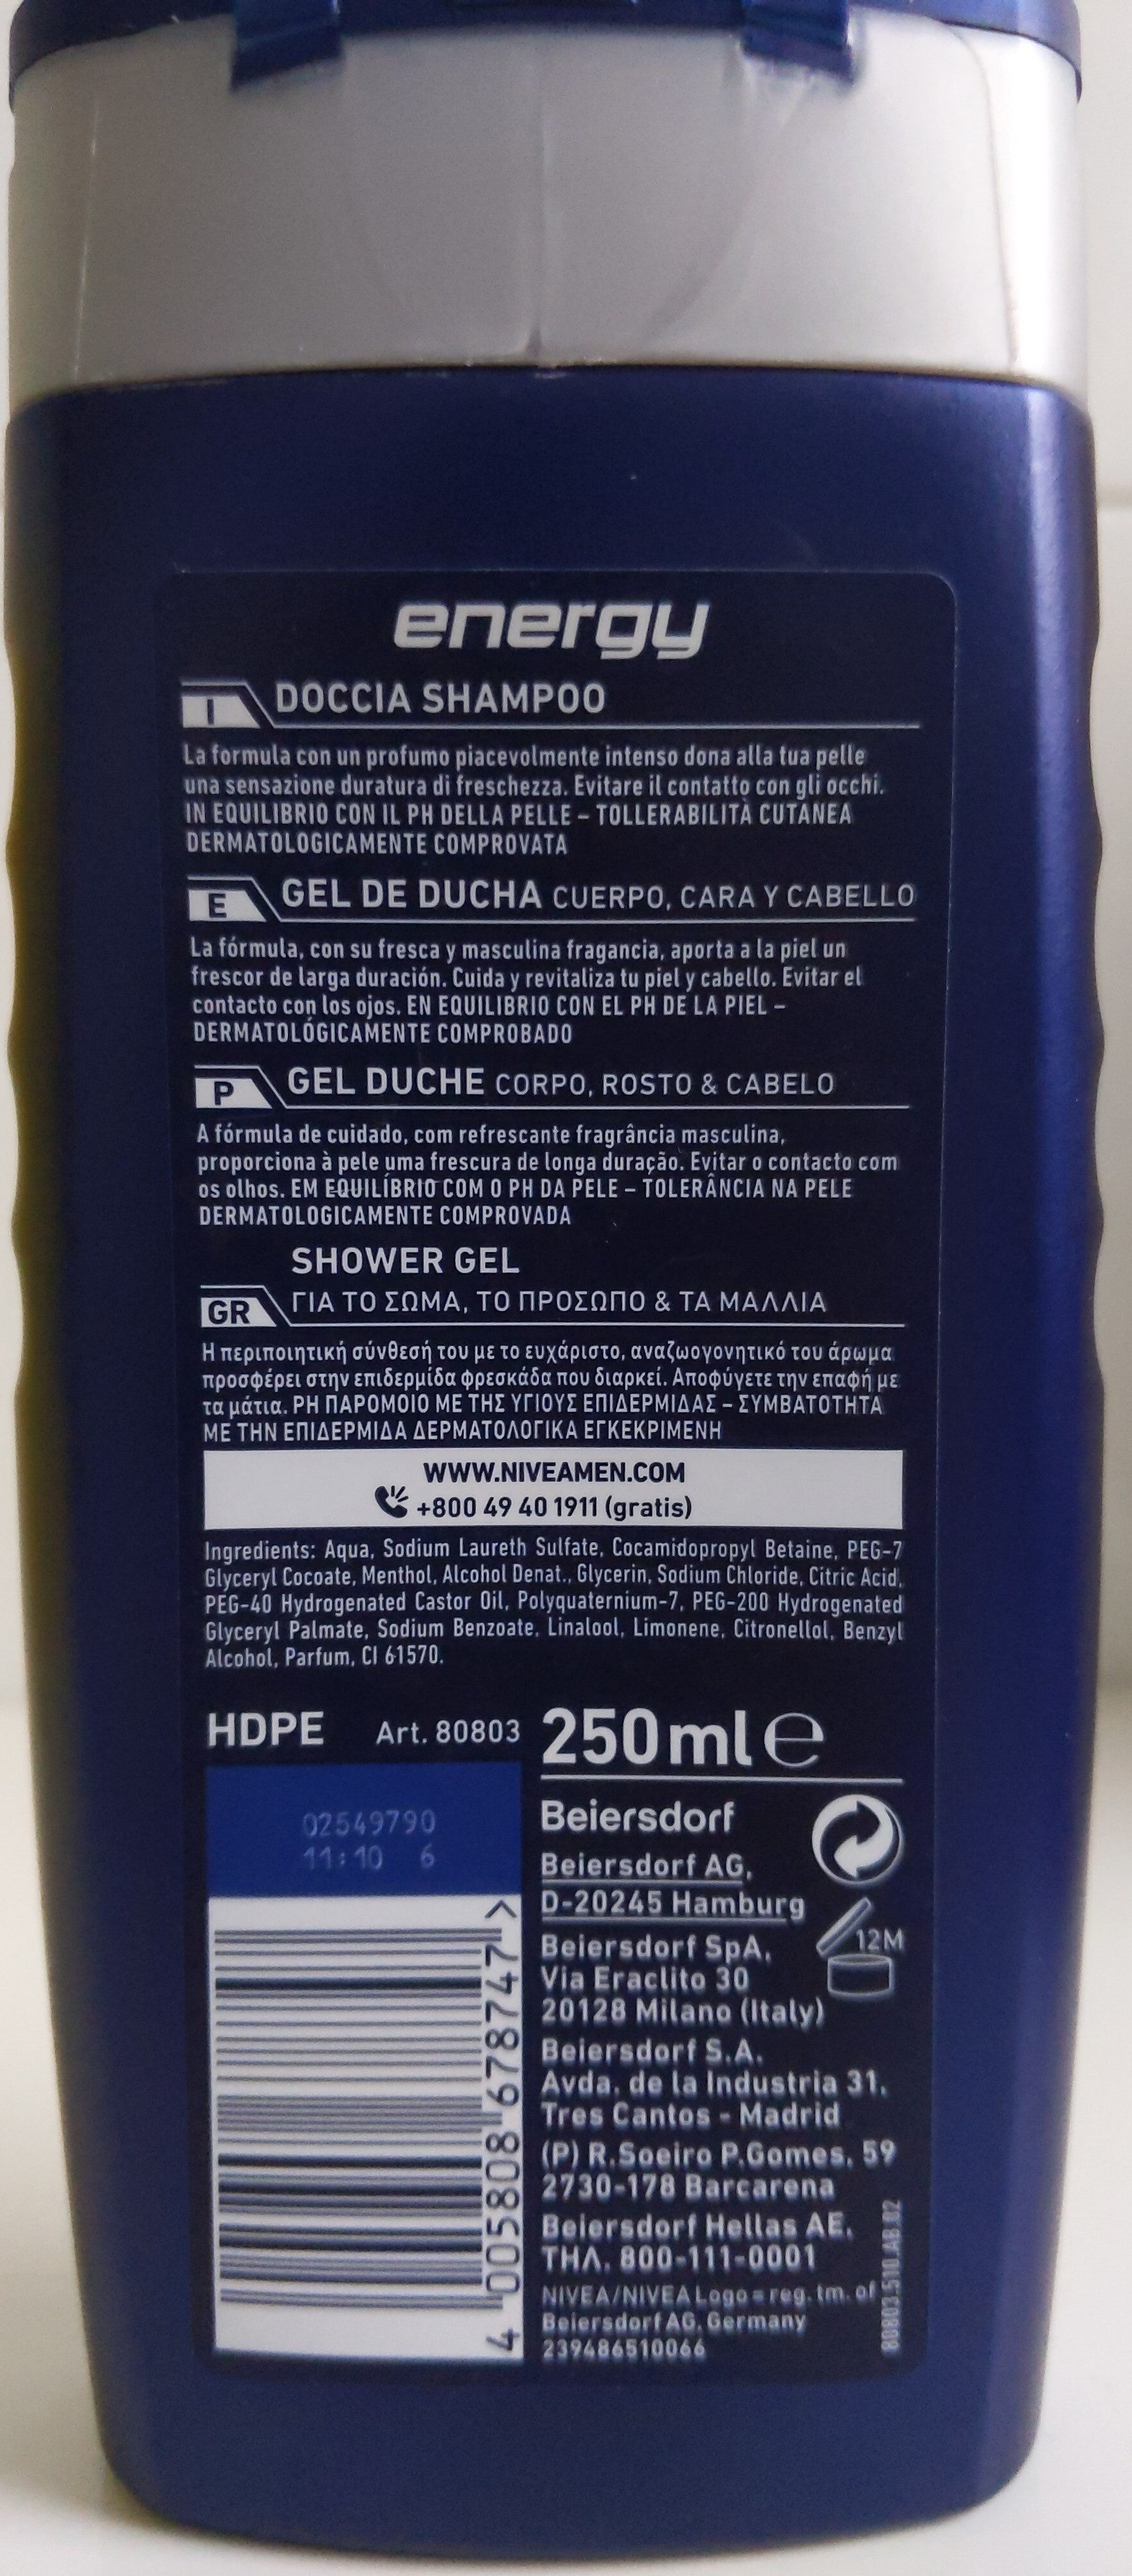 Nivea for men doccia gel energy - Product - en